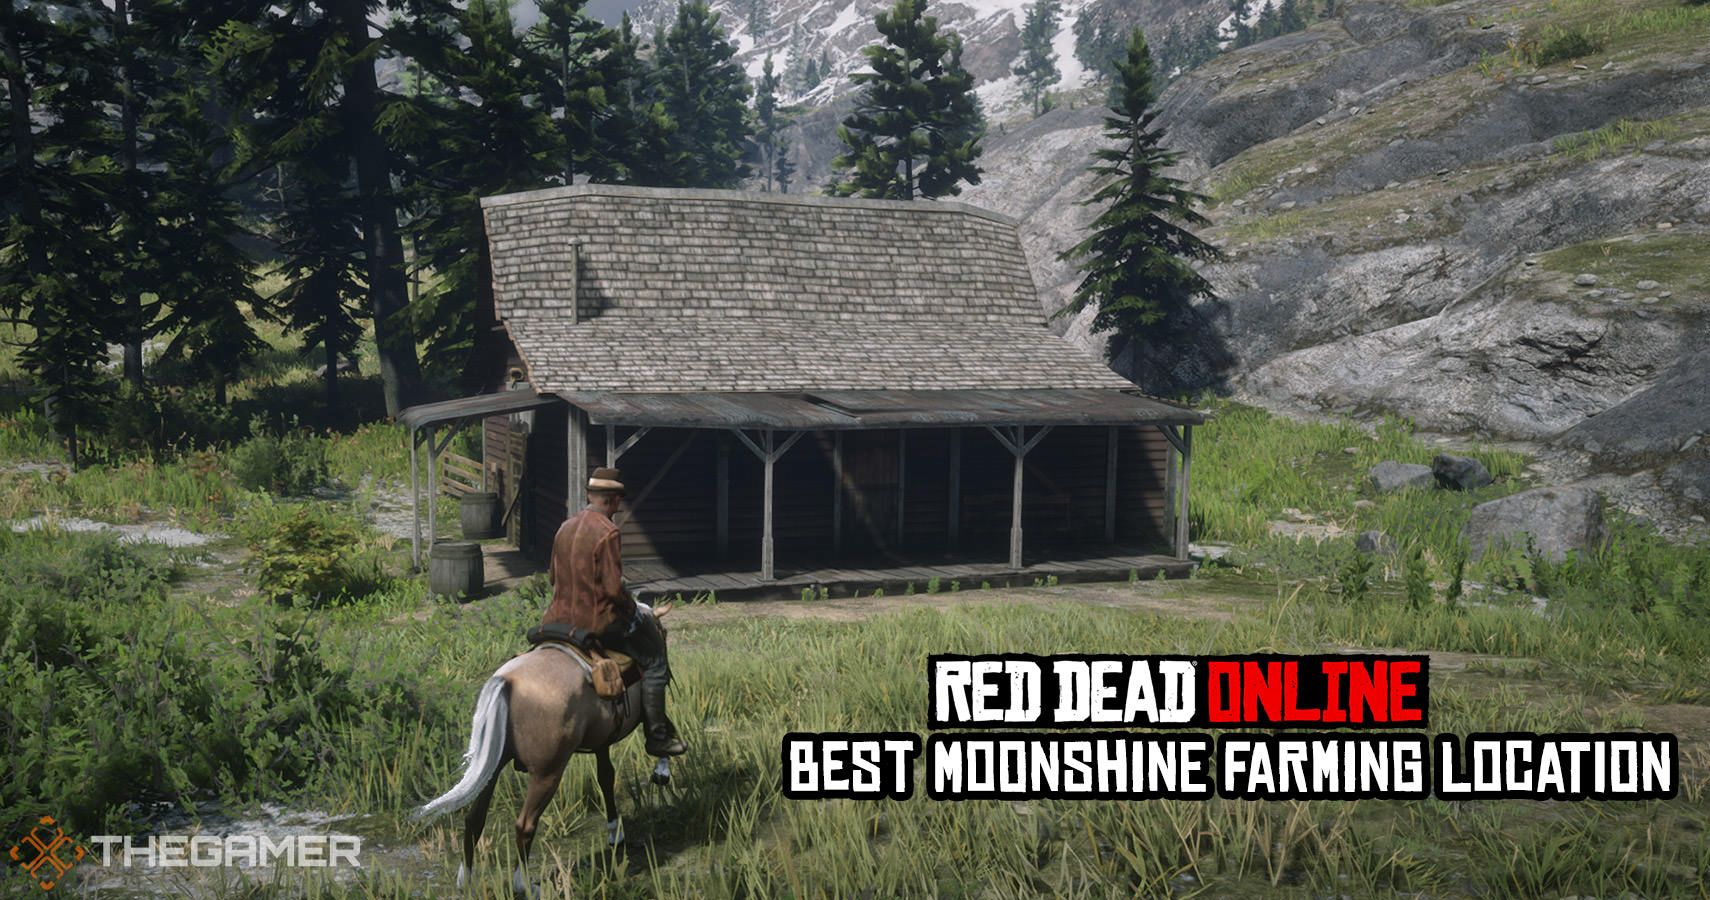 Red Dead Online Best Moonshine Farming Location